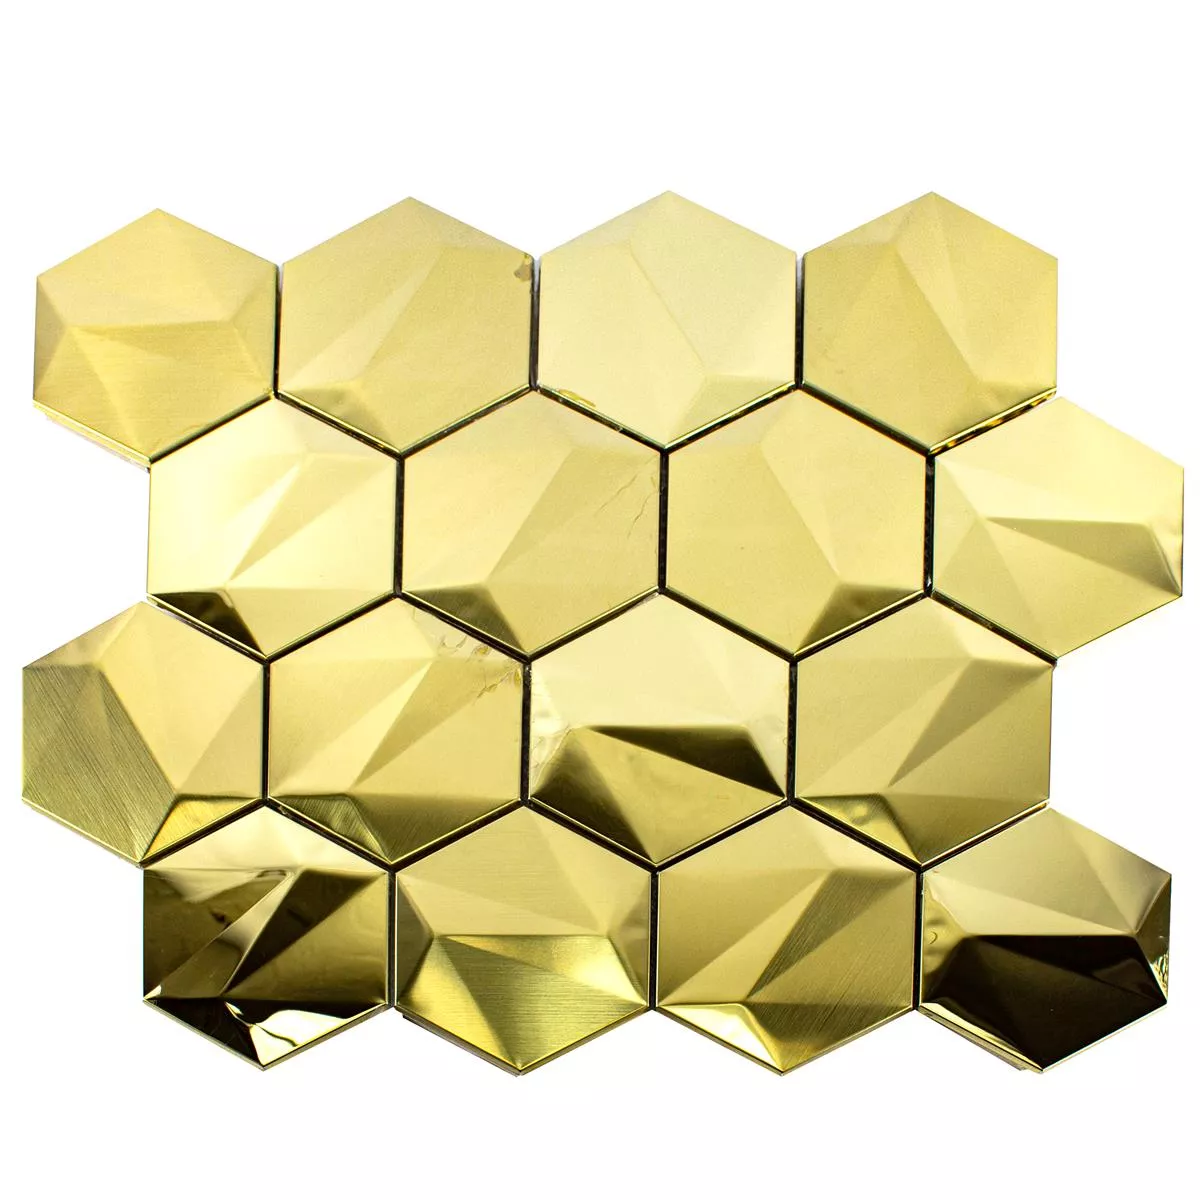 Sample Stainless Steel Mosaic Tiles Durango Hexagon 3D Gold